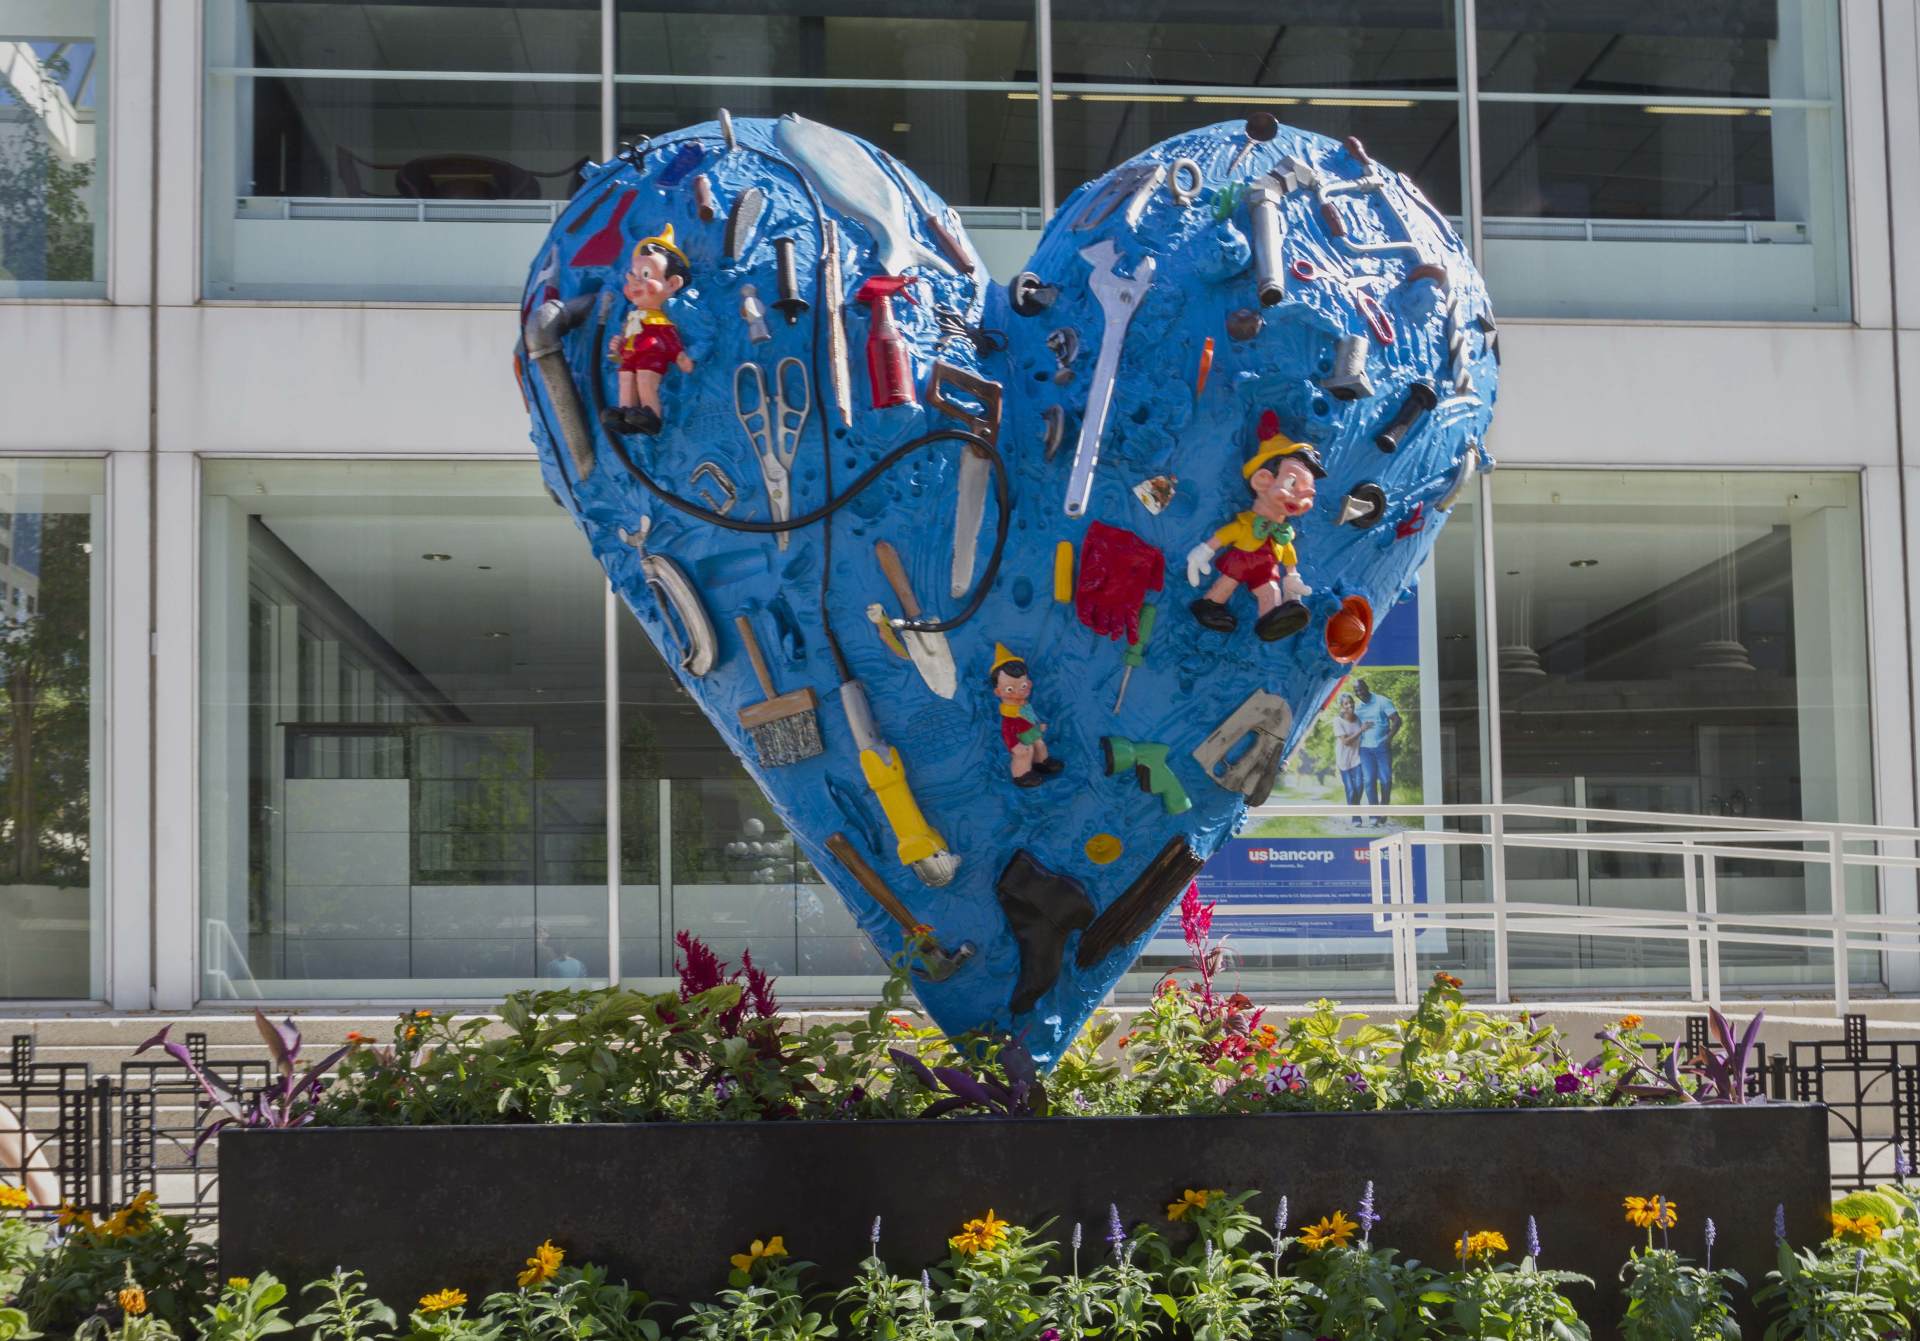 Jim Dine | The Heart After the Flood | 2011 | Sculpture Milwaukee 2017